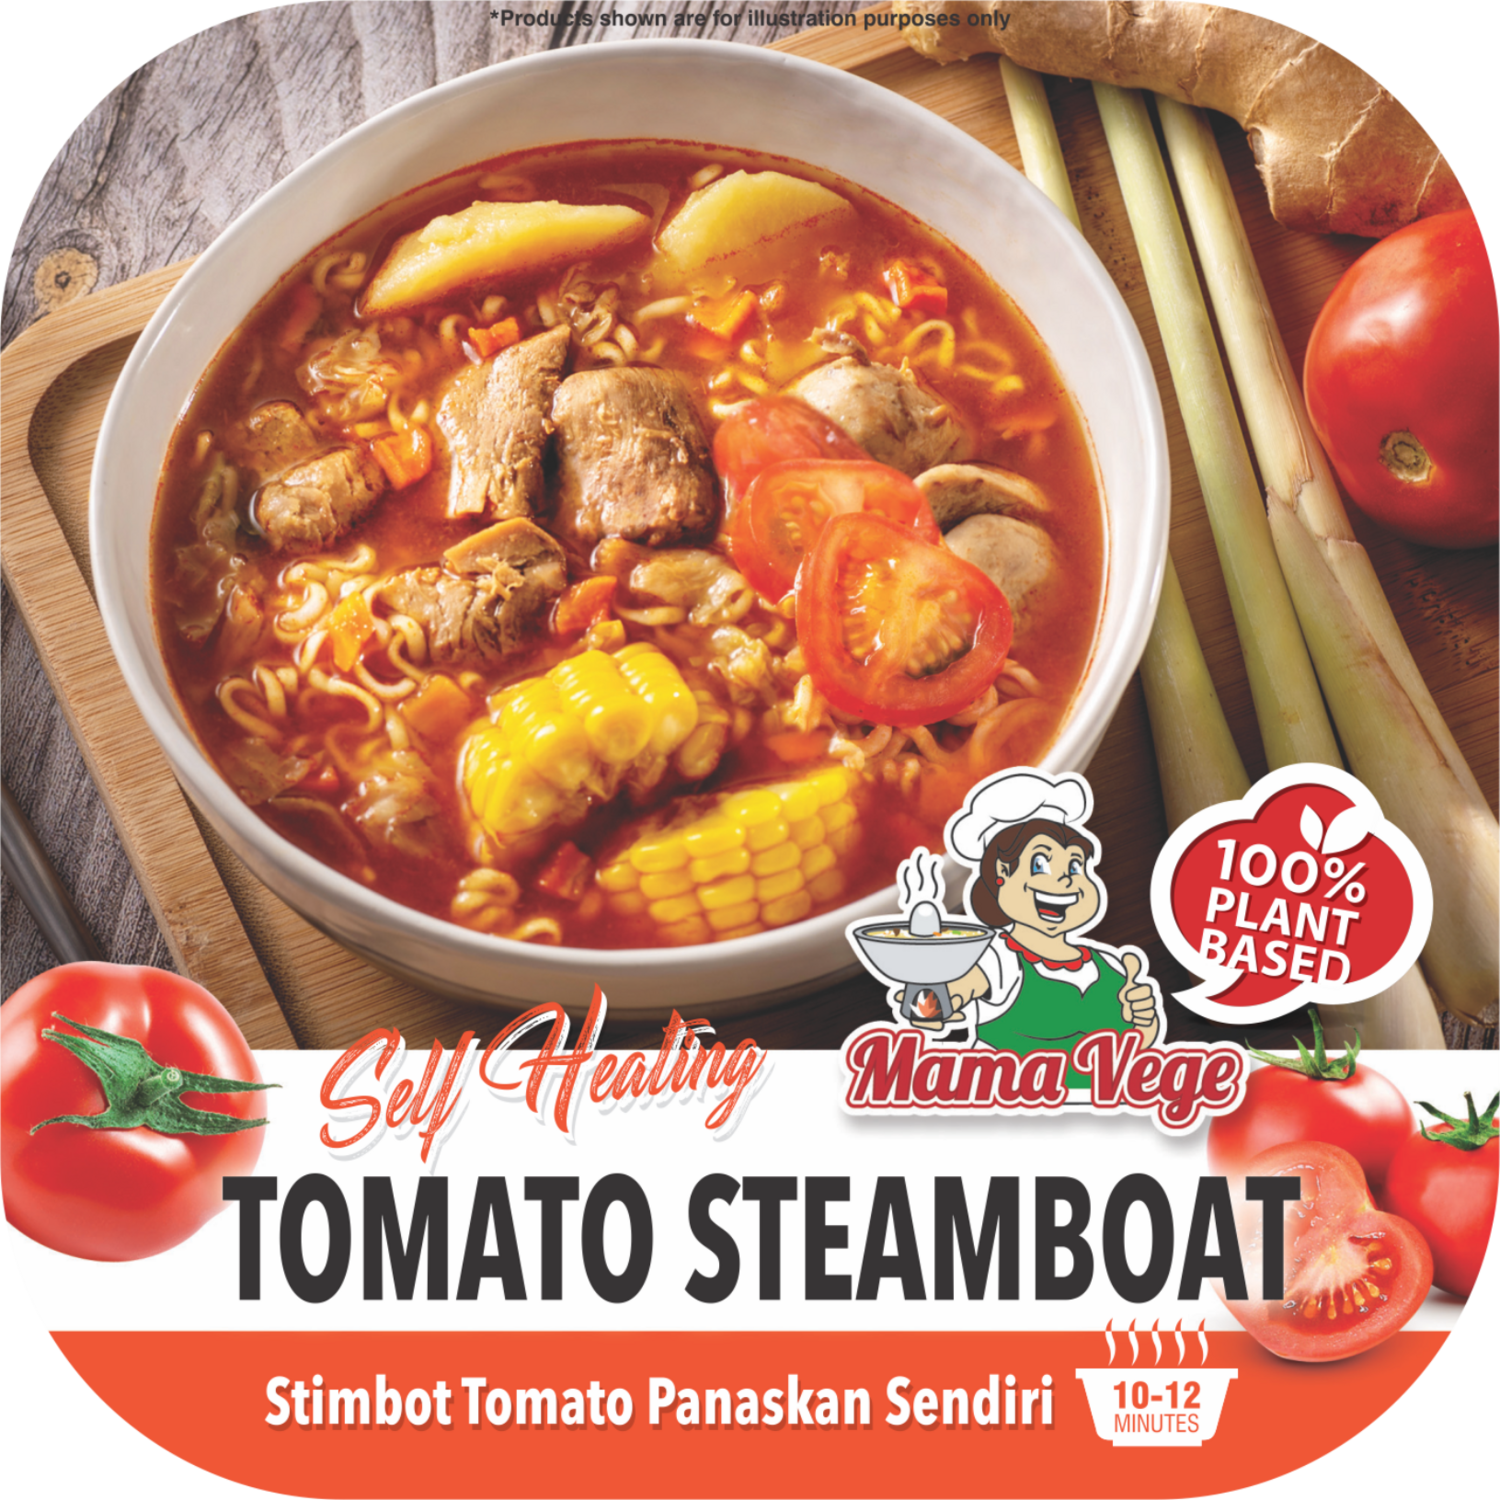 Vegetarian Self-Heating Tomato Steamboat